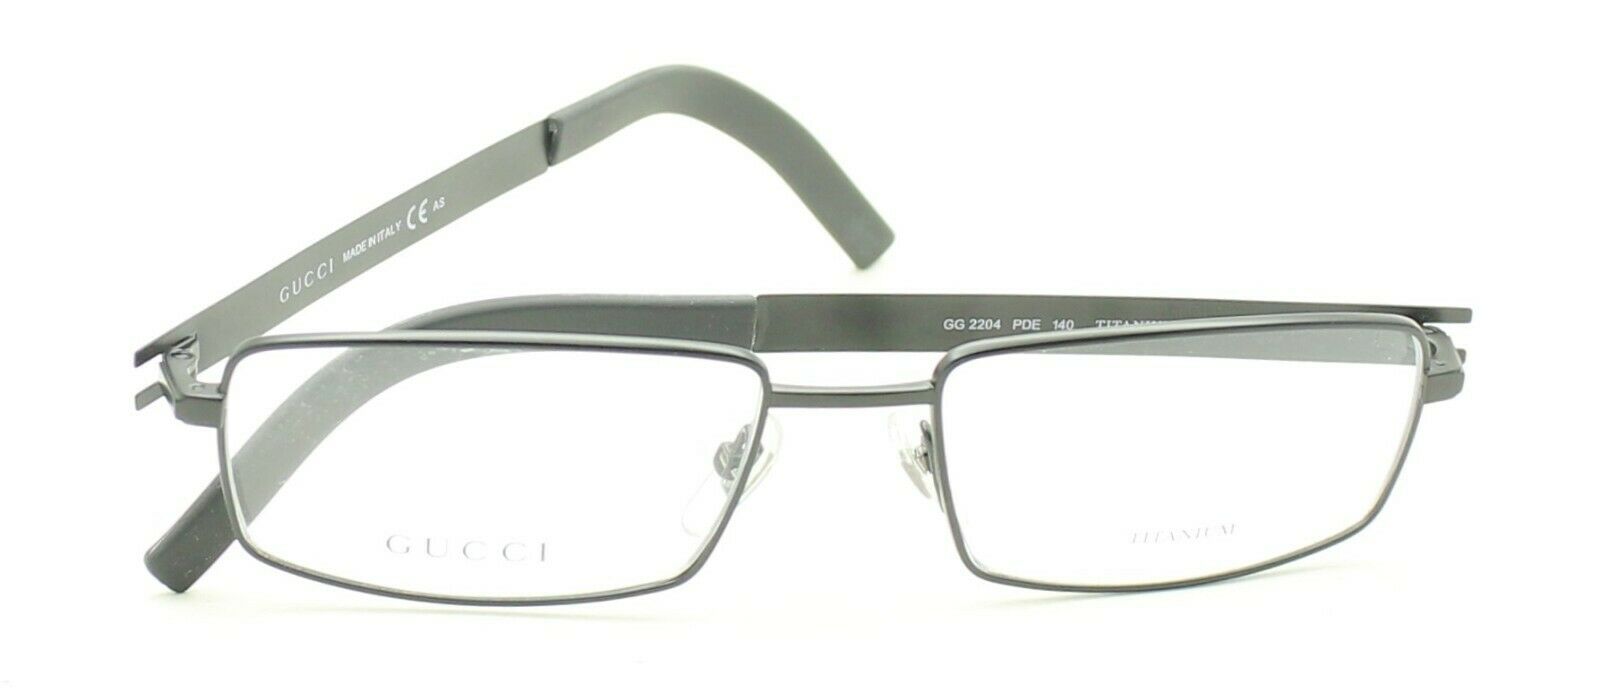 GUCCI GG 2204 PDE 53mm Eyewear FRAMES Glasses RX Optical Eyeglasses New - Italy